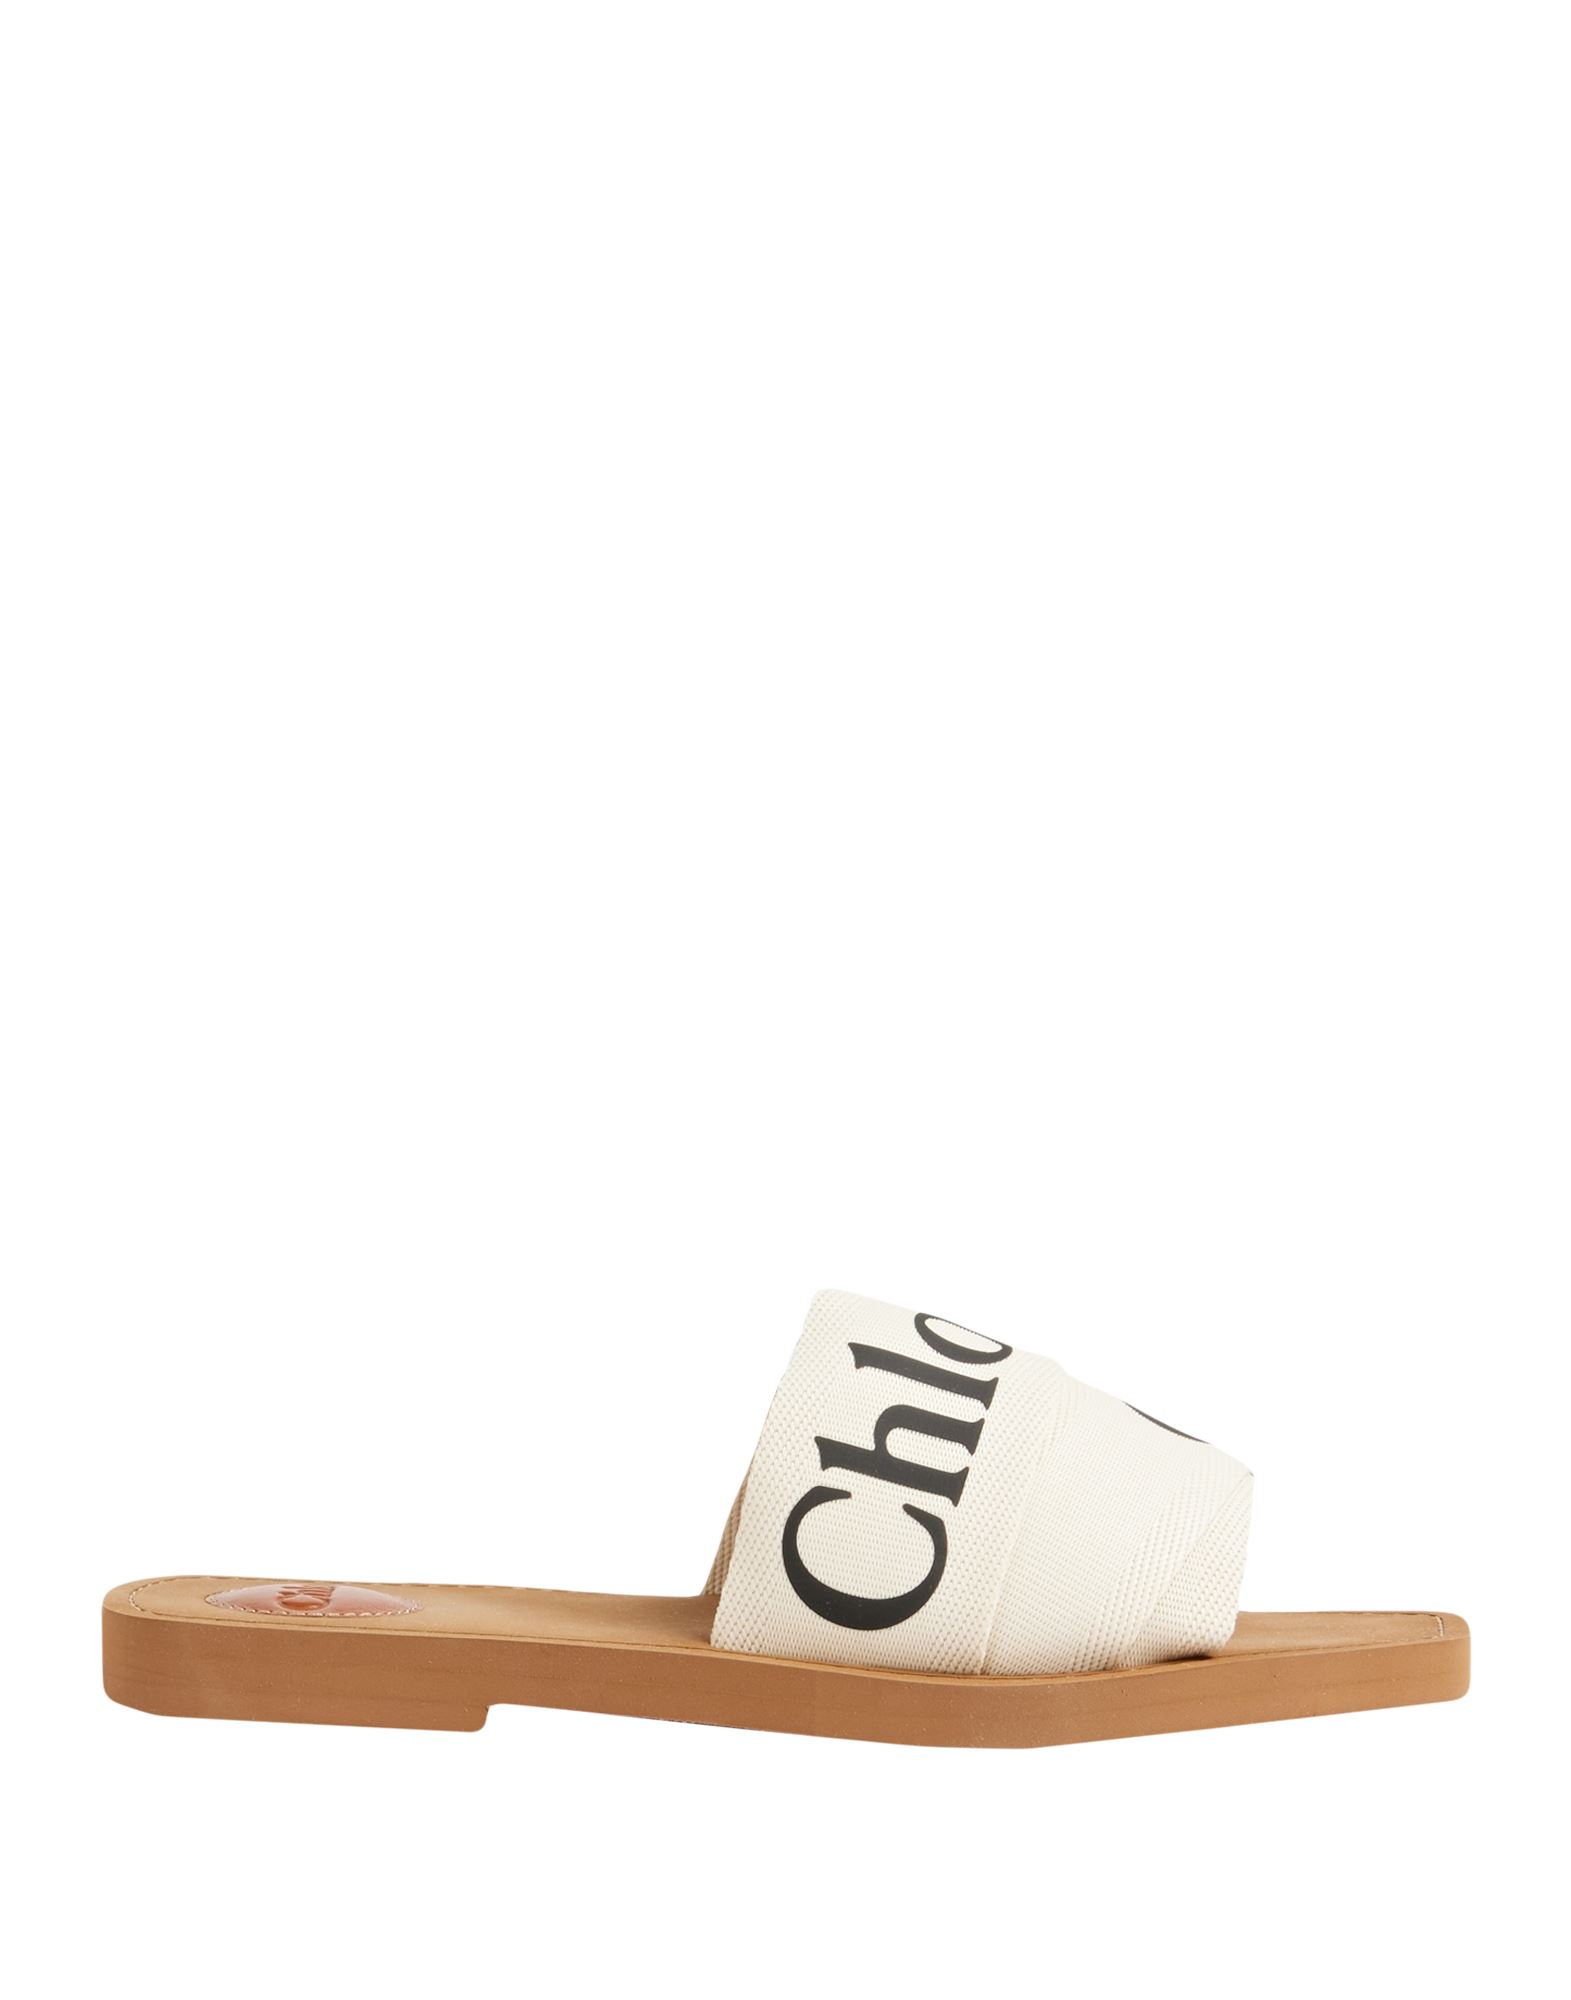 Chloé Sandals In White